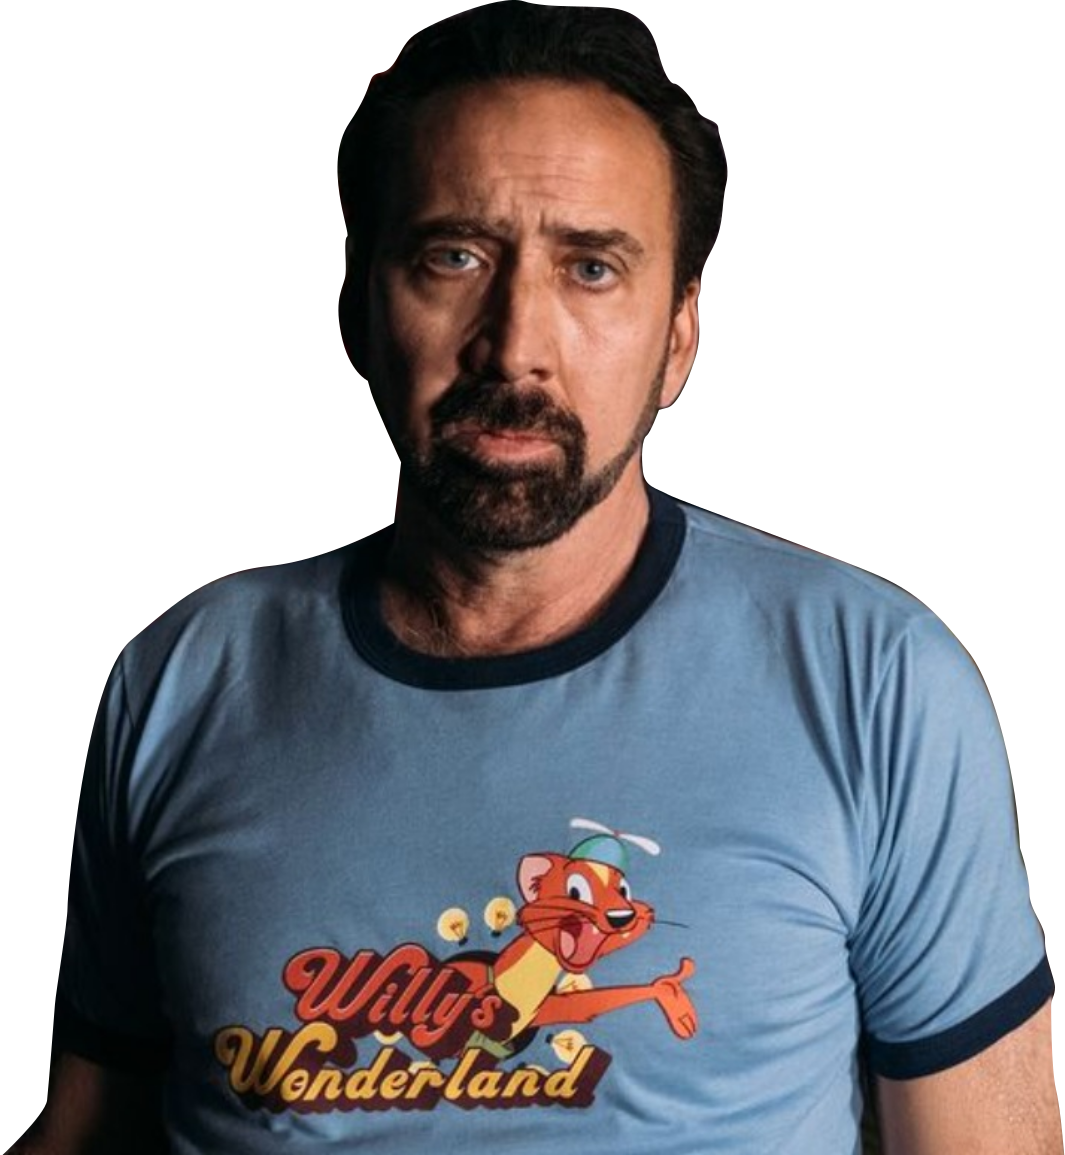 Willy's Wonderland Horror Movie T-shirt, Horror Film T-shirt